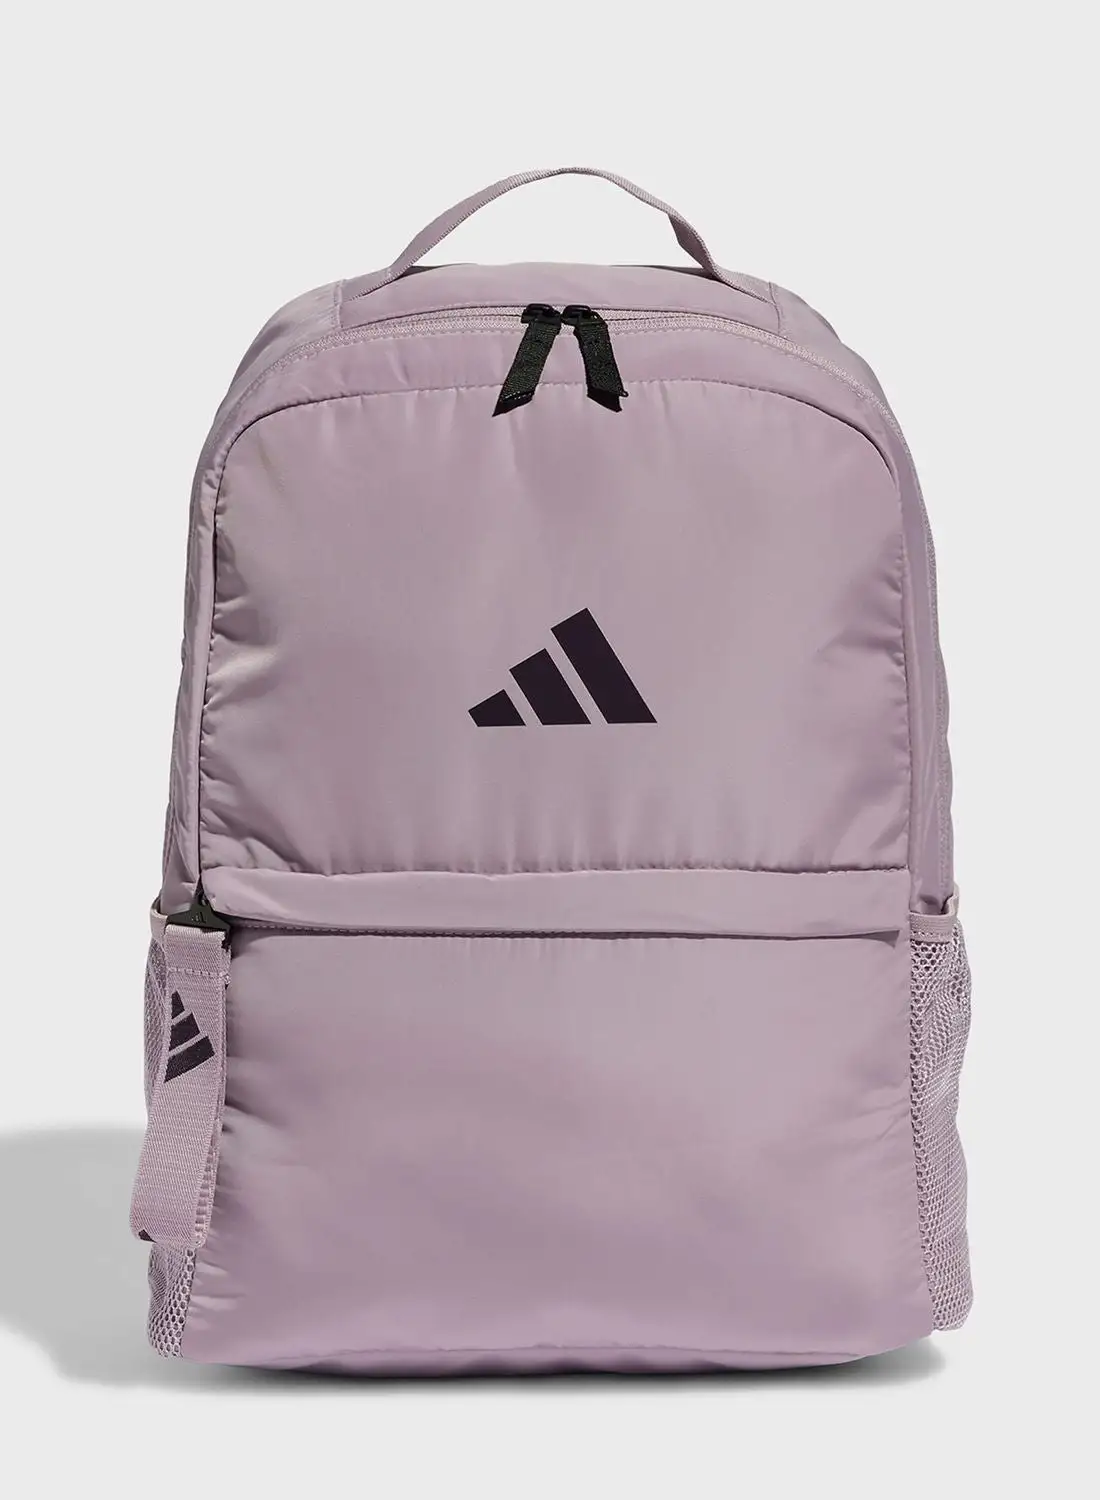 Adidas Essential Backpack